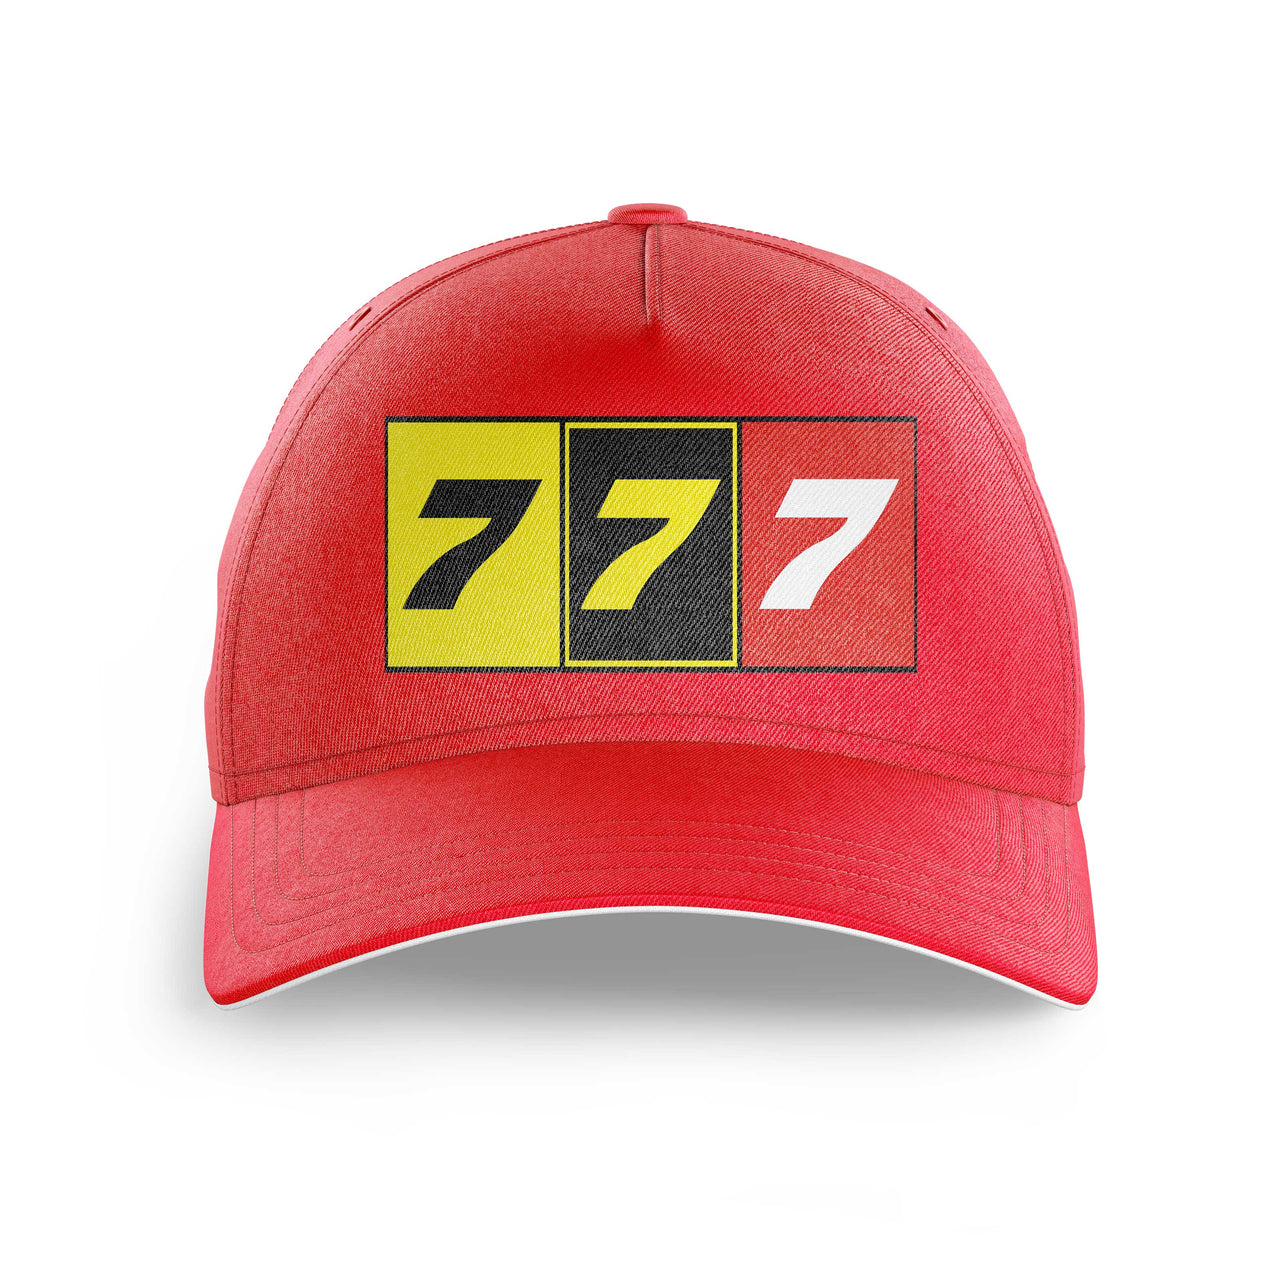 Flat Colourful 777 Printed Hats